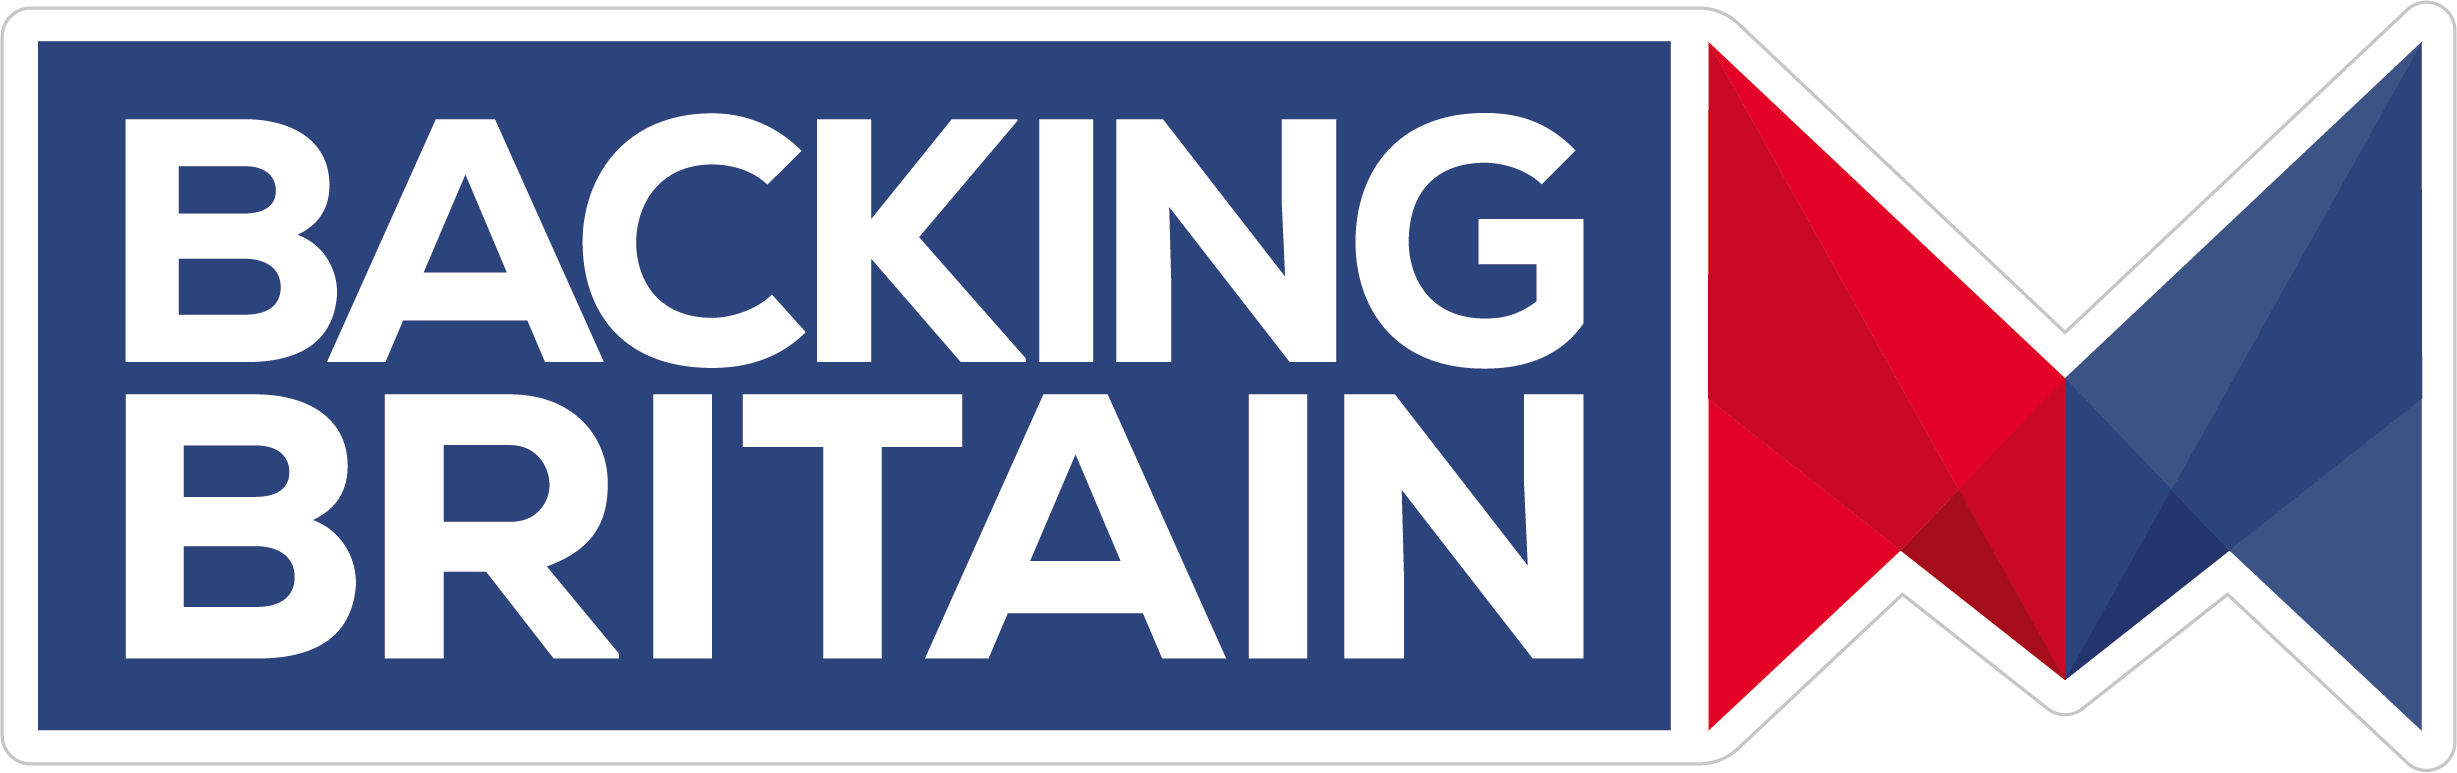 Backing Britain Logo Image